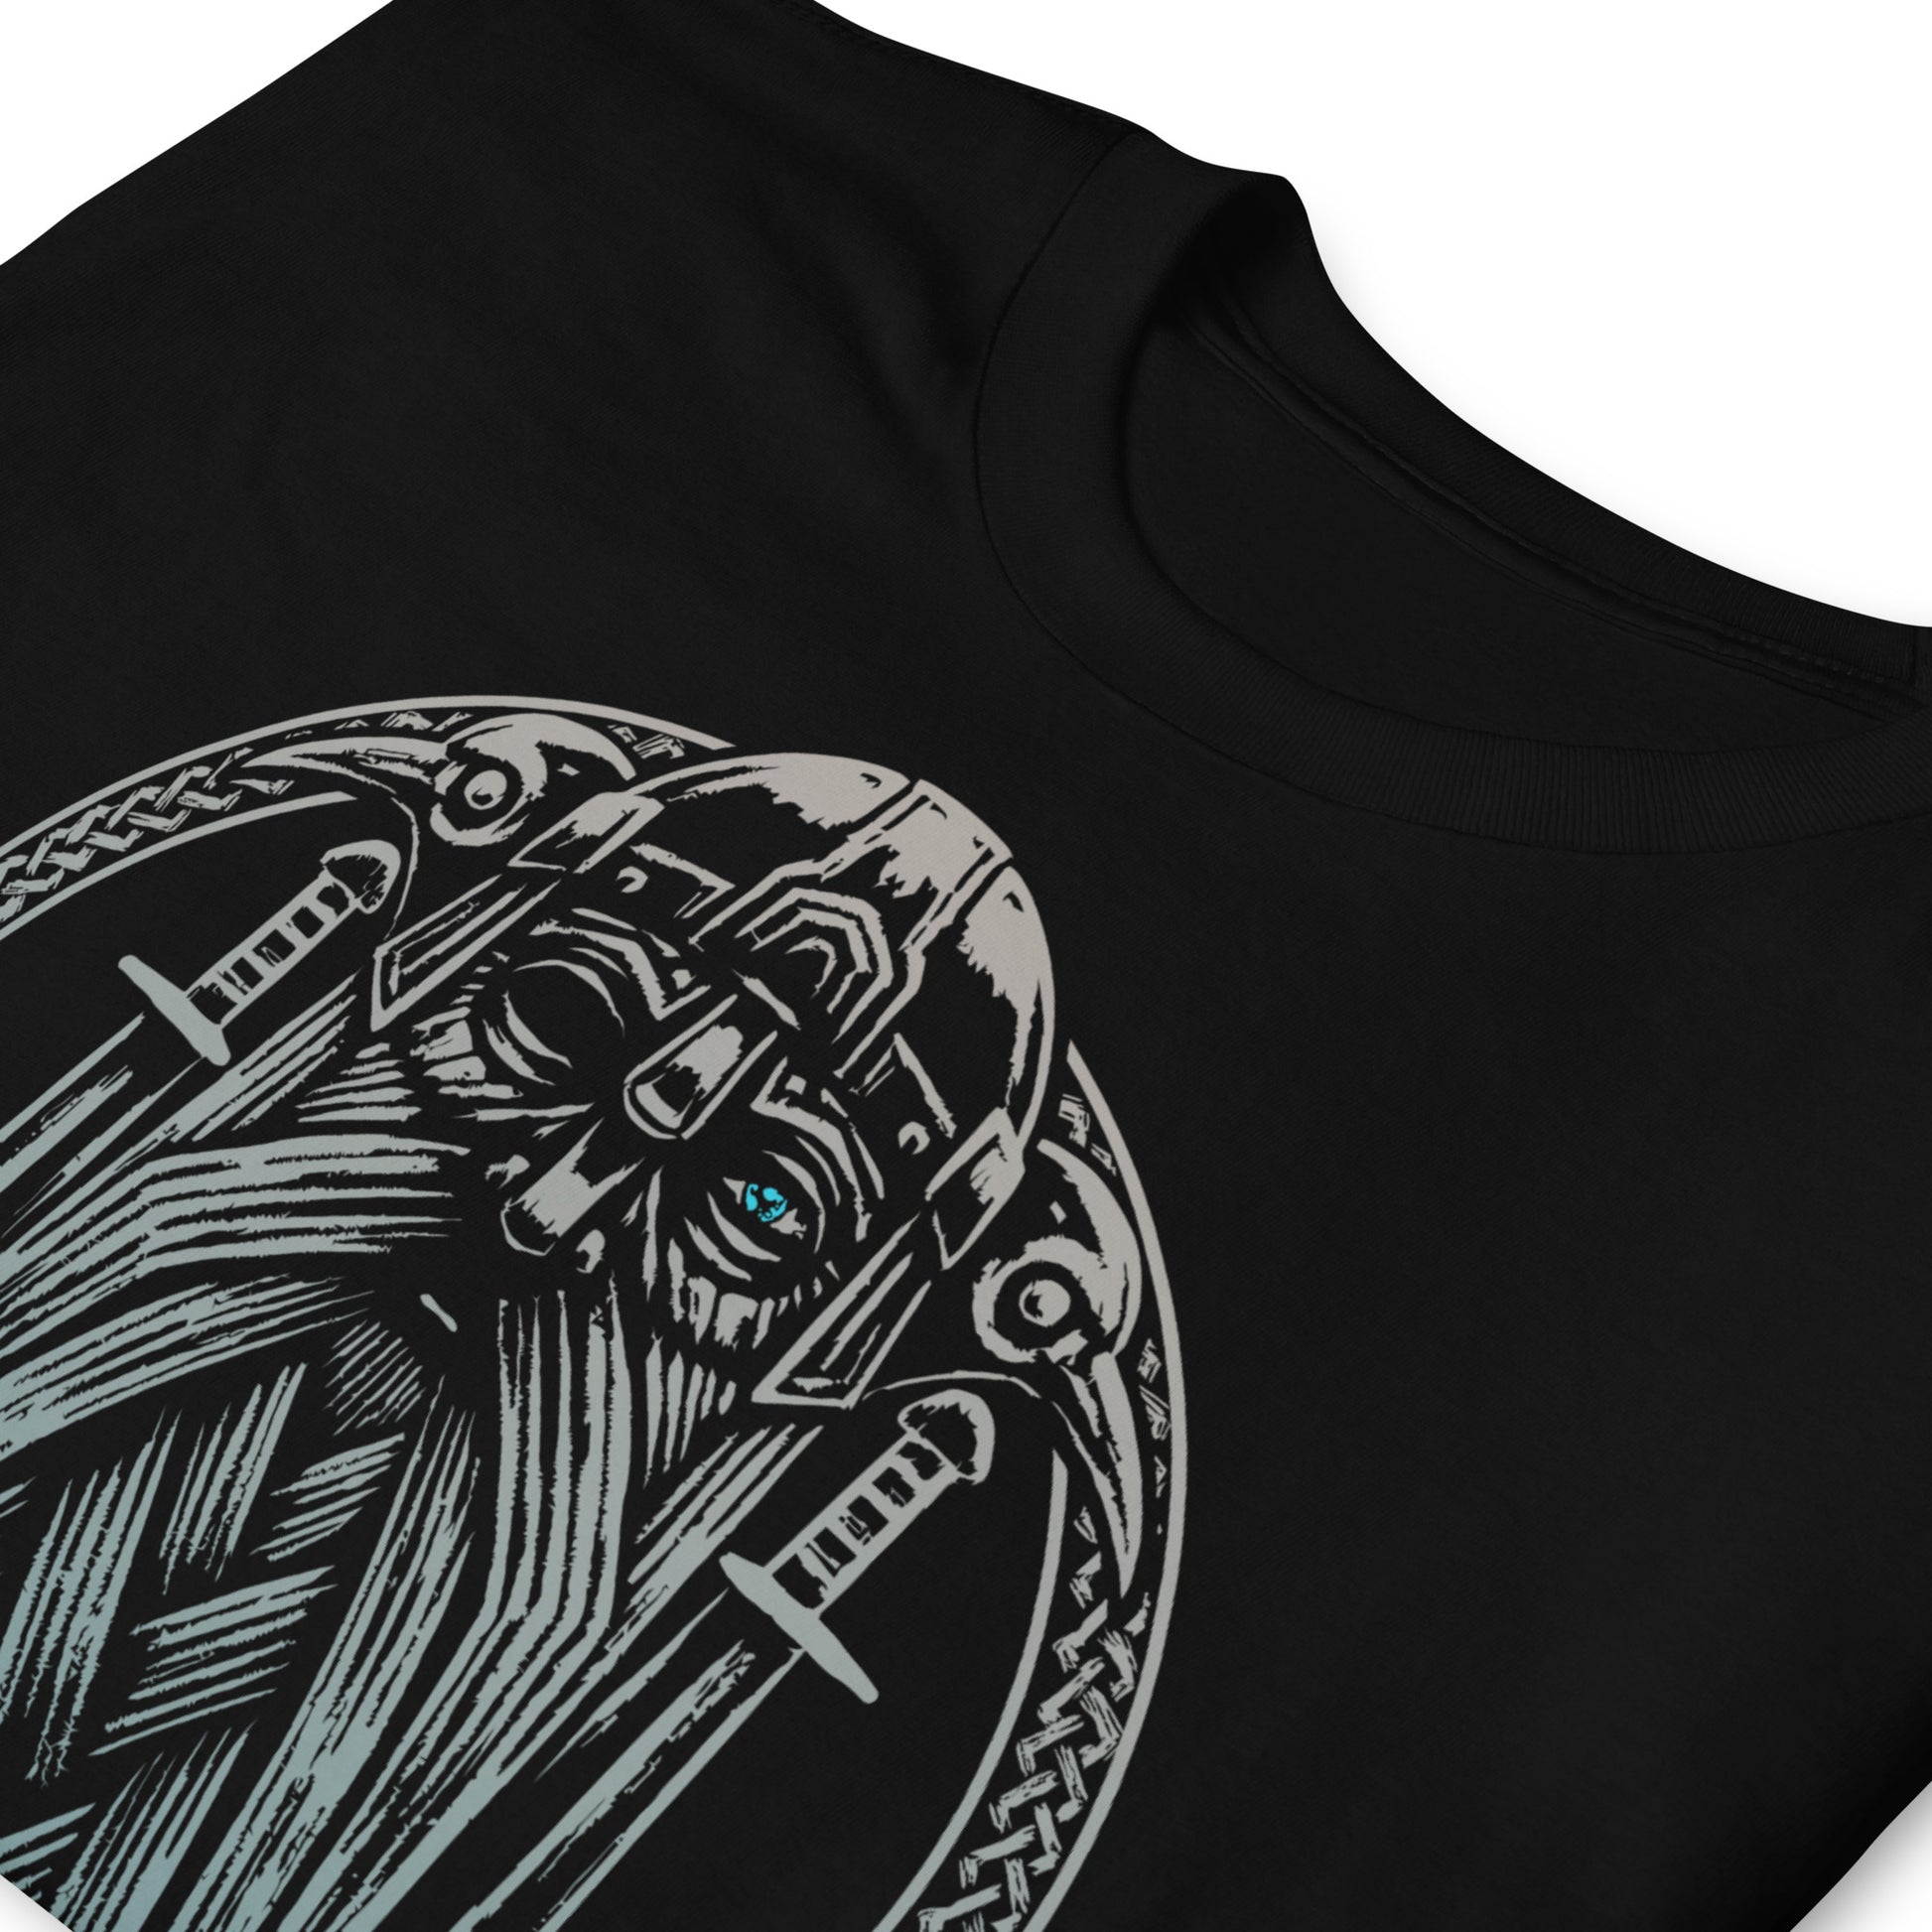 Camiseta de Odin - Vikings. Color Negro.